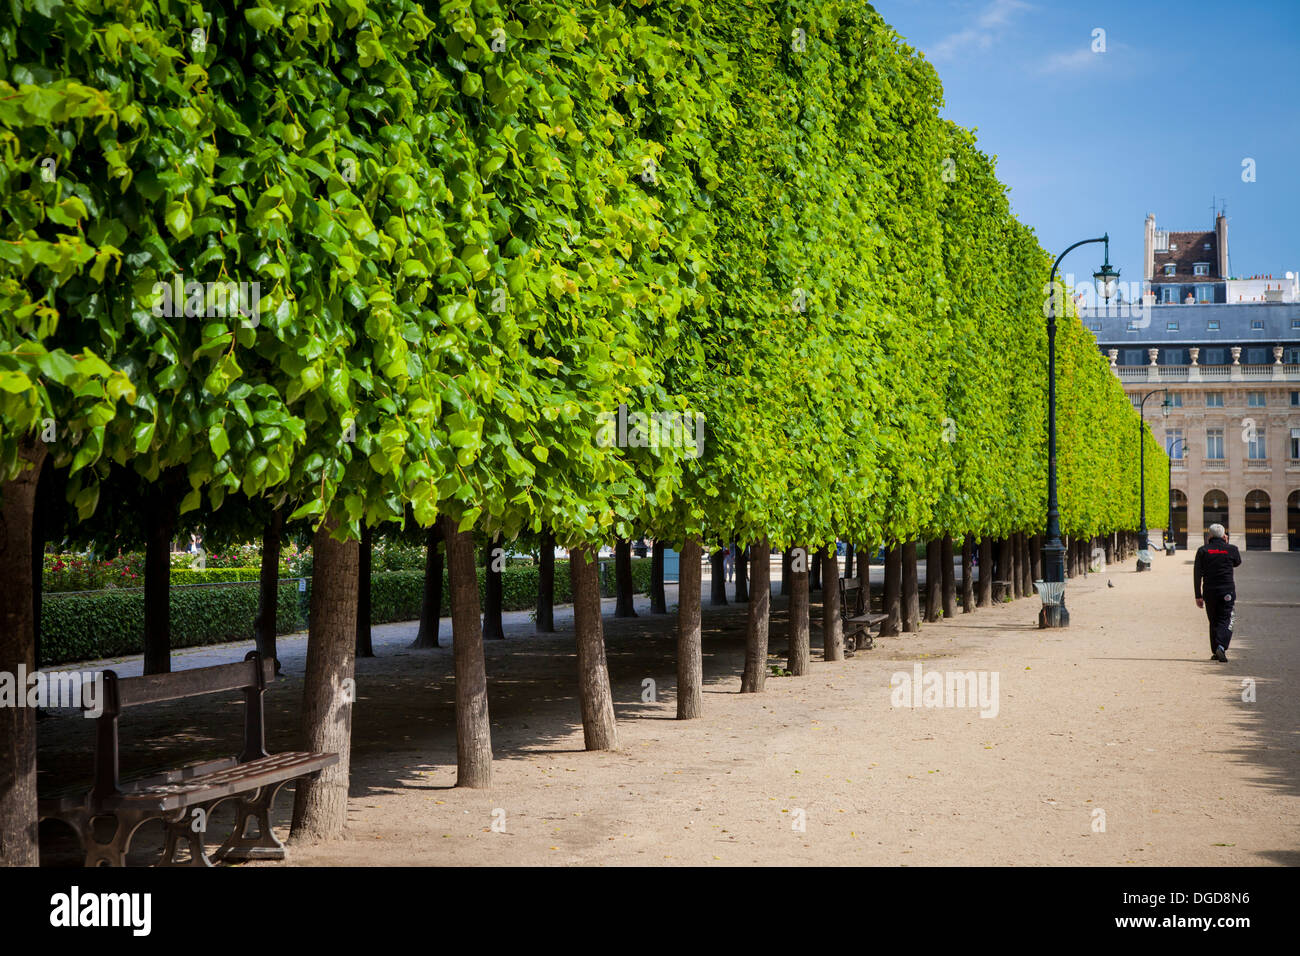 La linea di alberi nel giardino del Palais Royal, Paris Francia Foto Stock